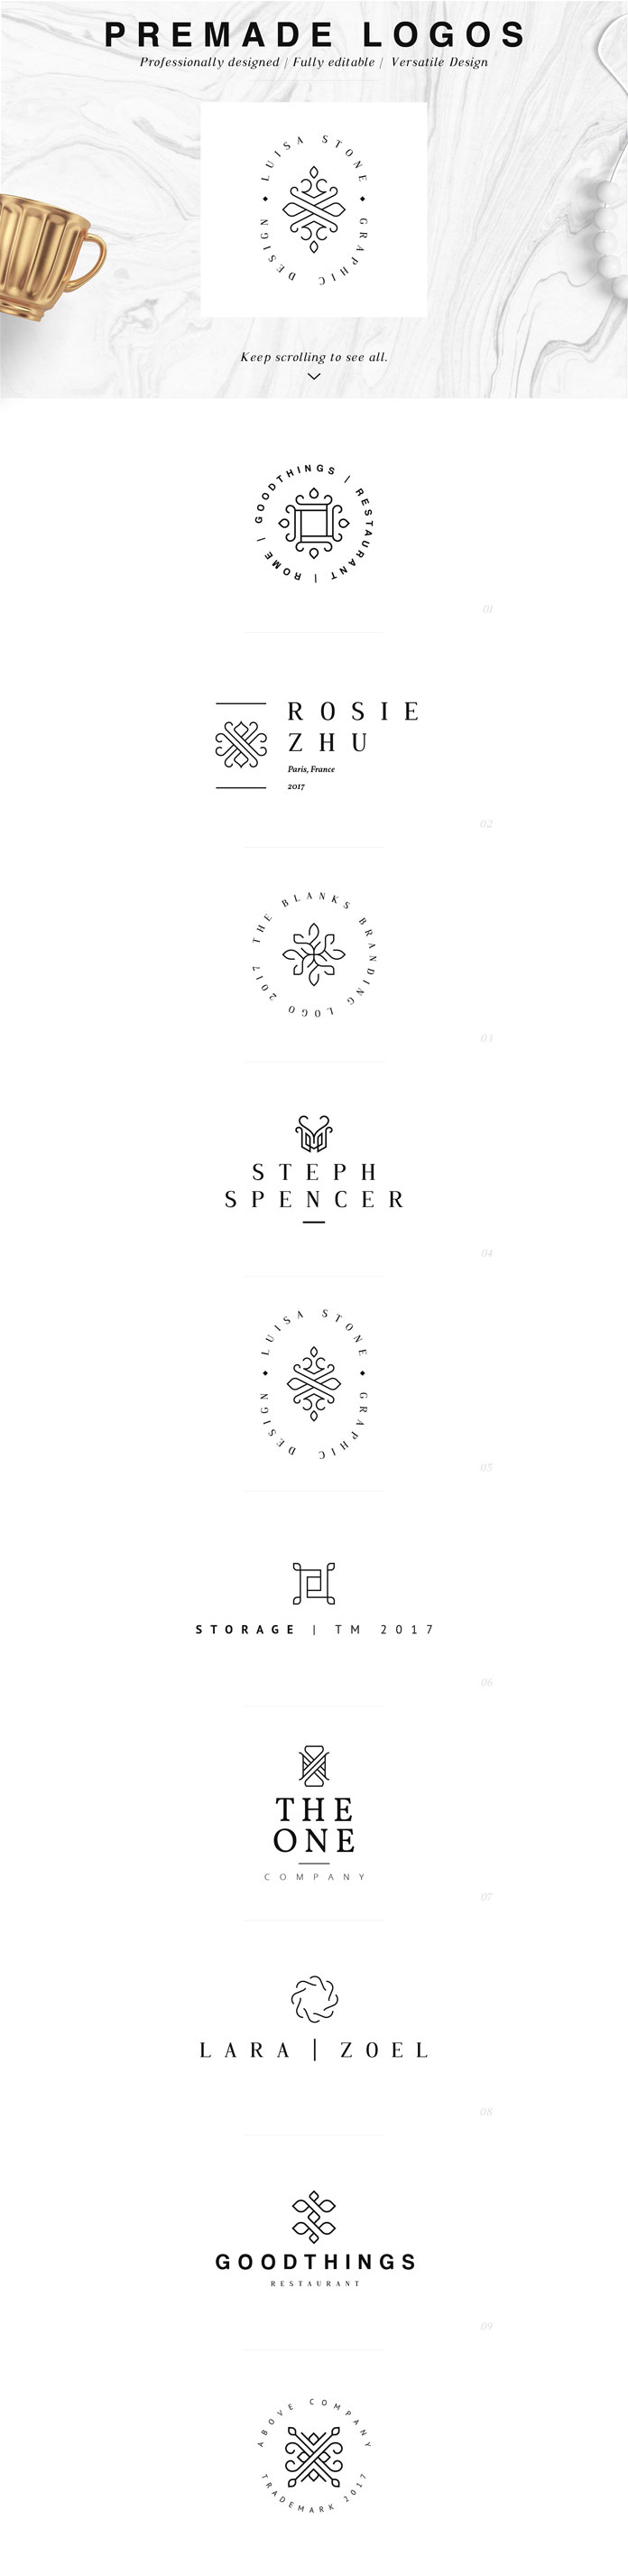 Pre-made logos.